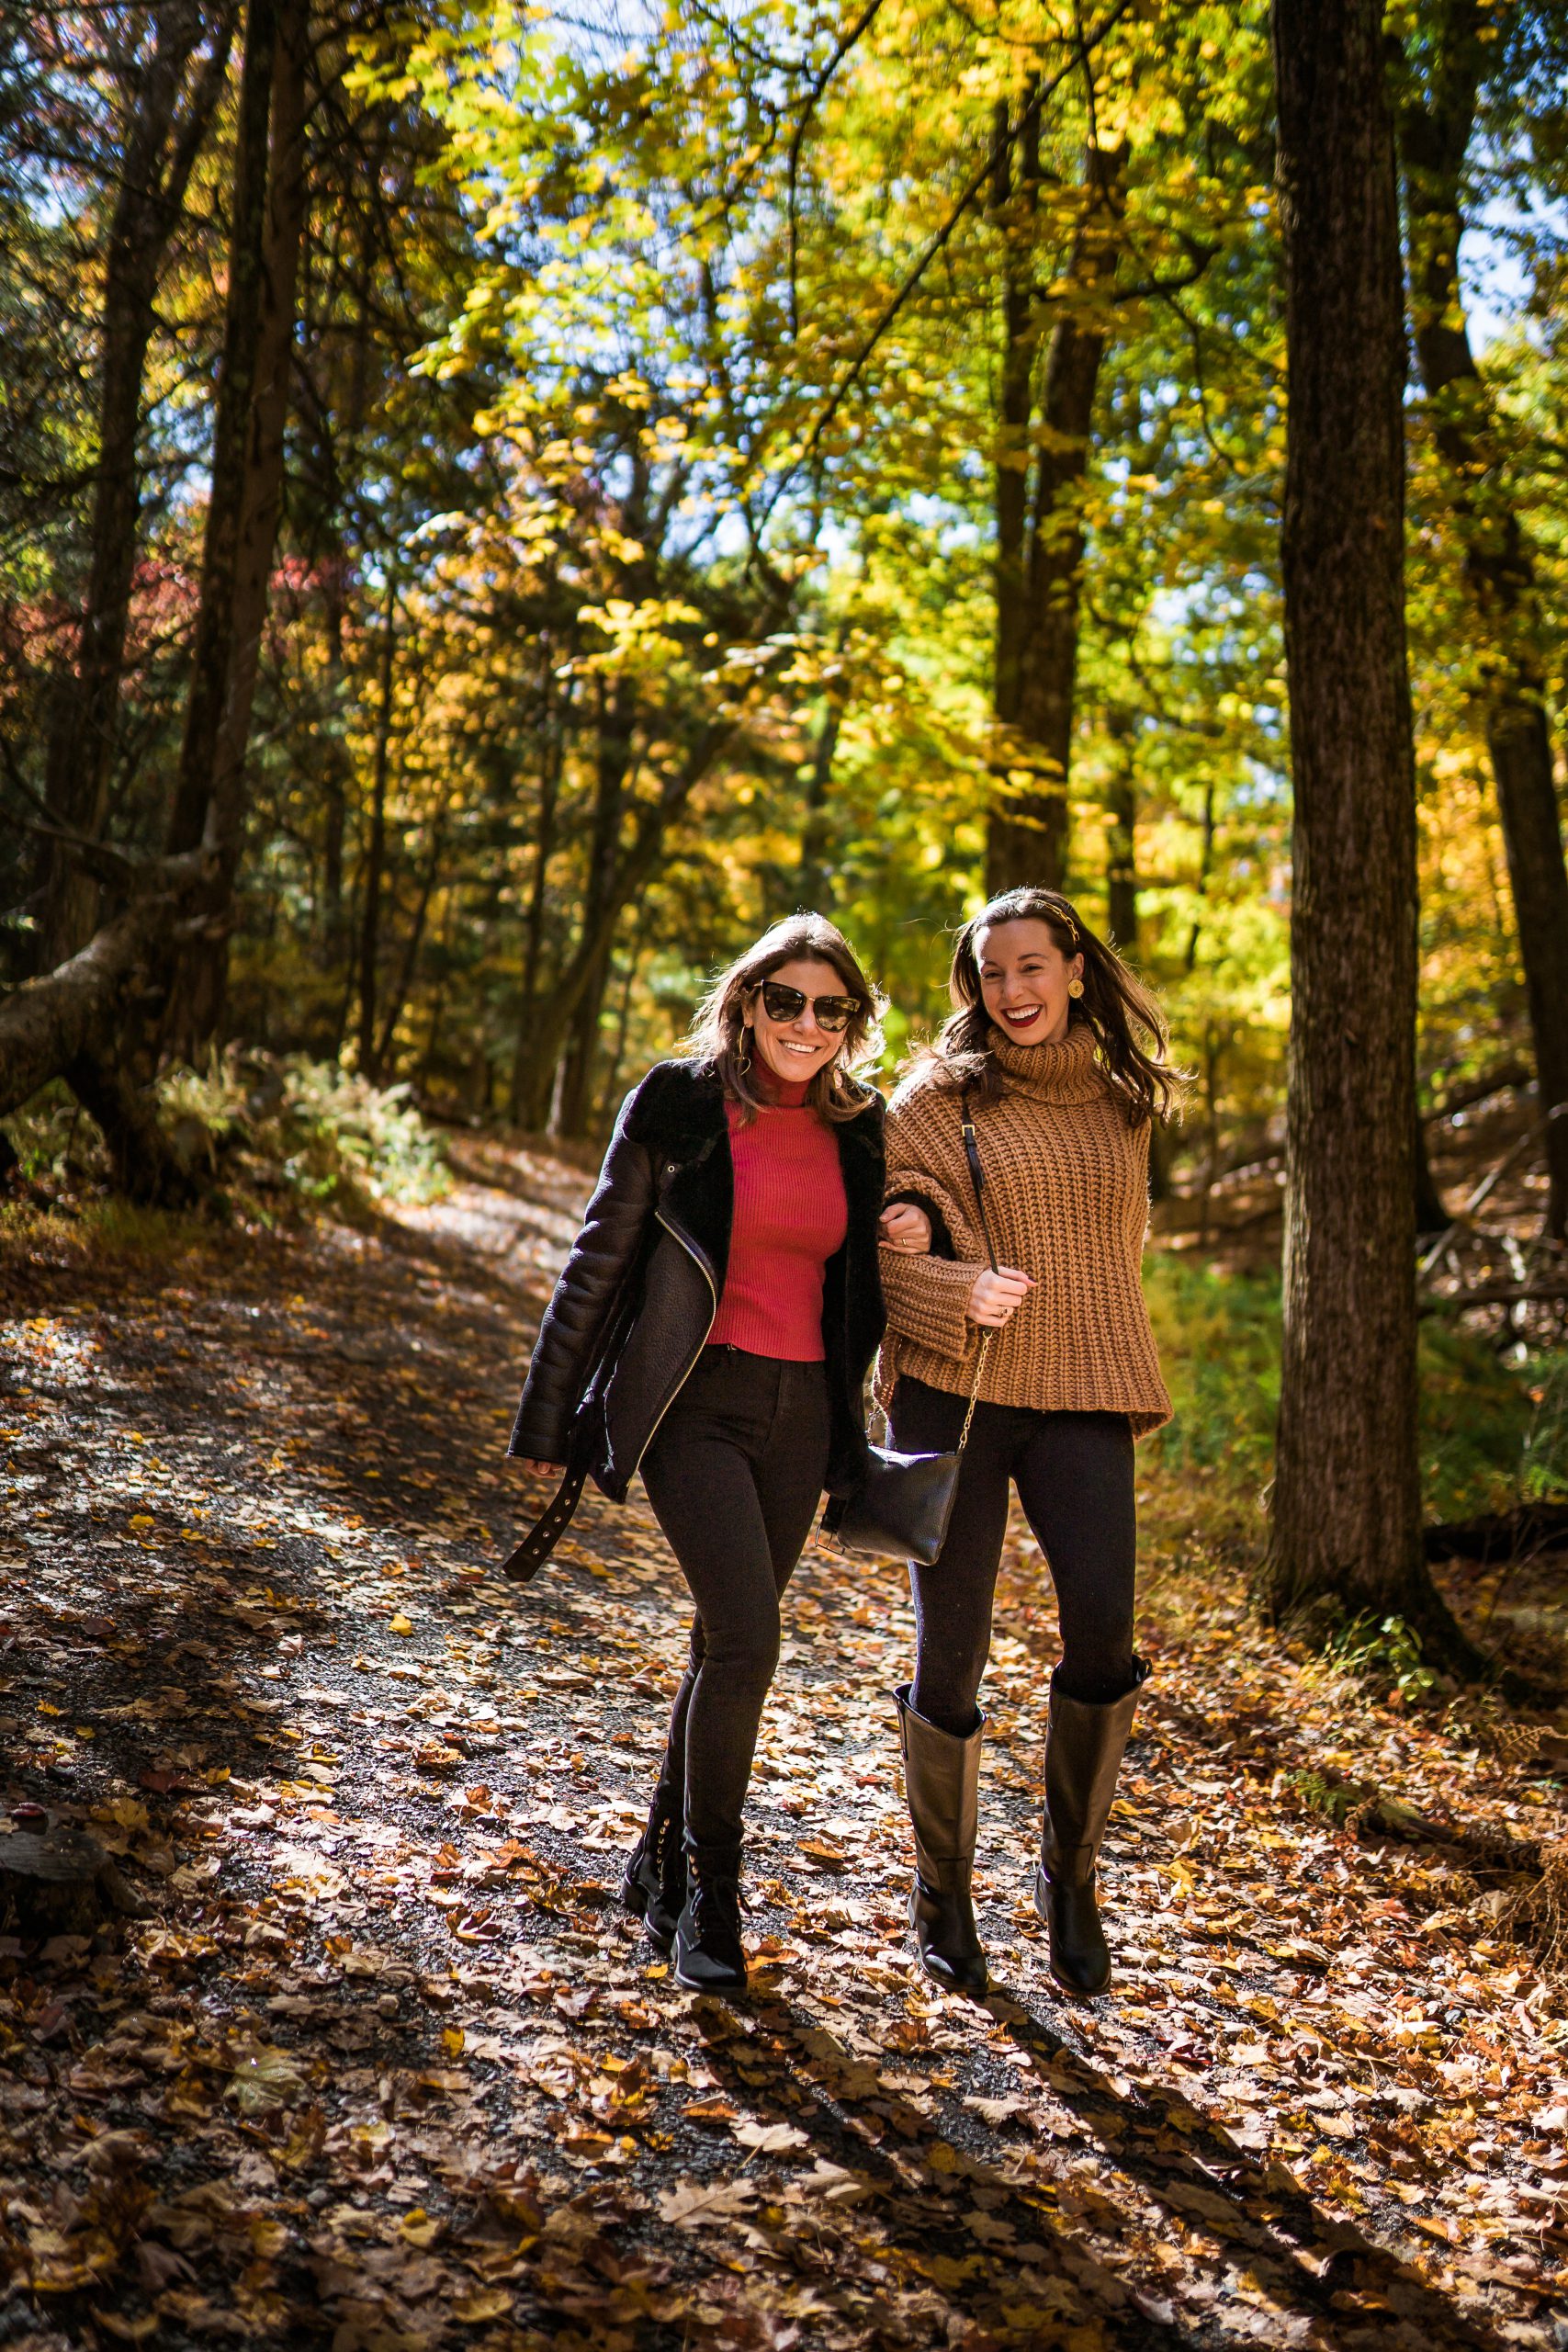 Sarah Funk and Laura Peruchi walking through the main trail.